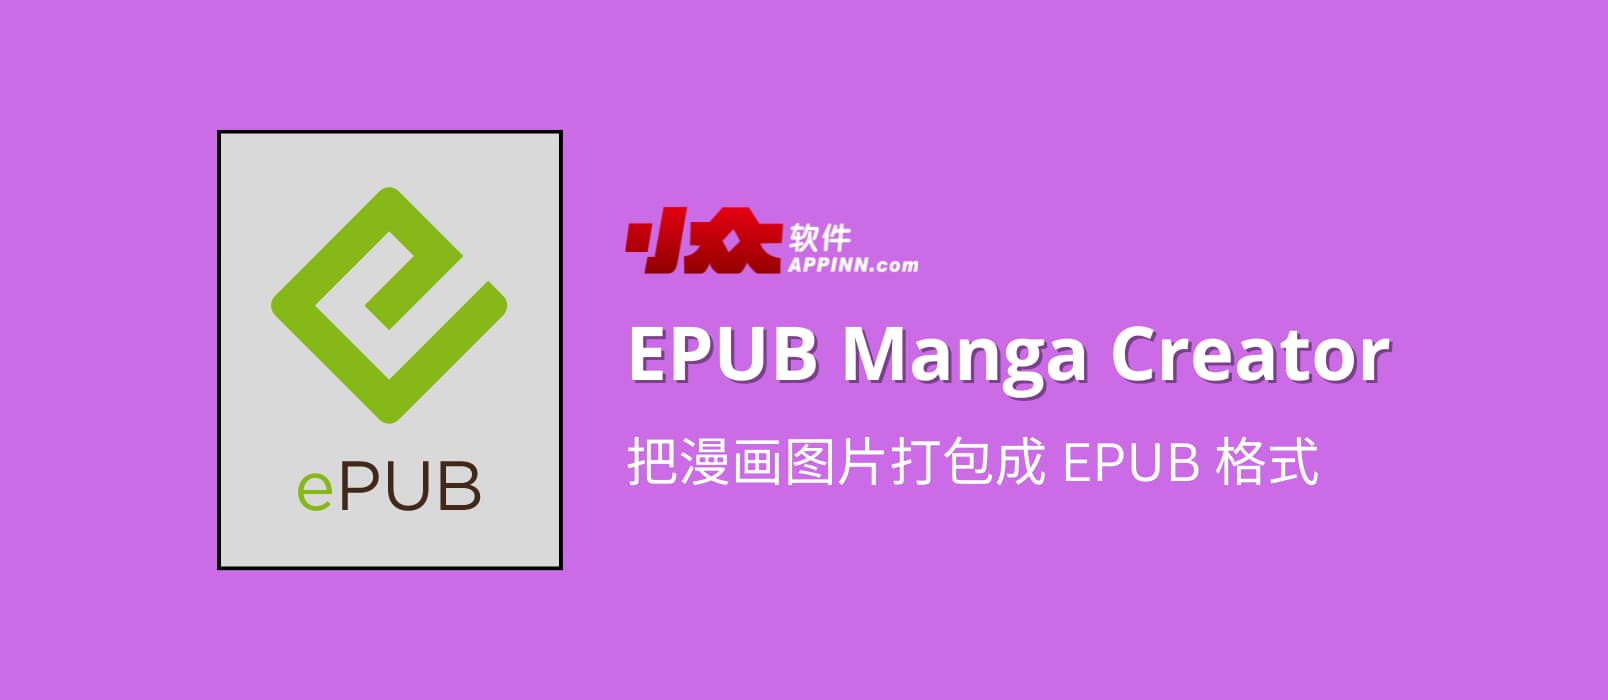 EPUB Manga Creator – 把漫画图片打包成 EPUB 格式